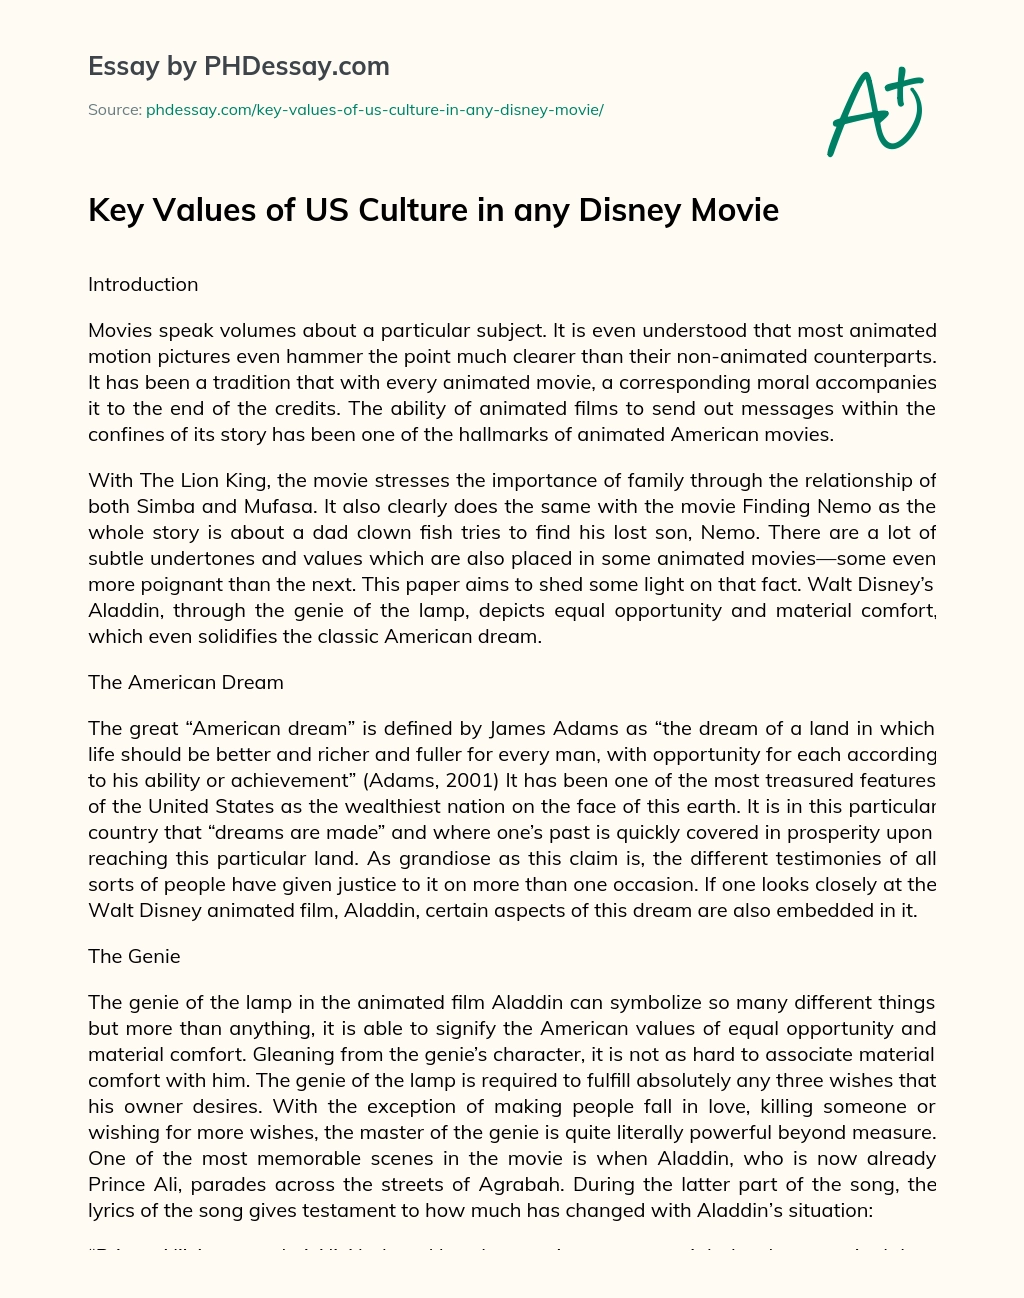 Key Values of US Culture in any Disney Movie essay